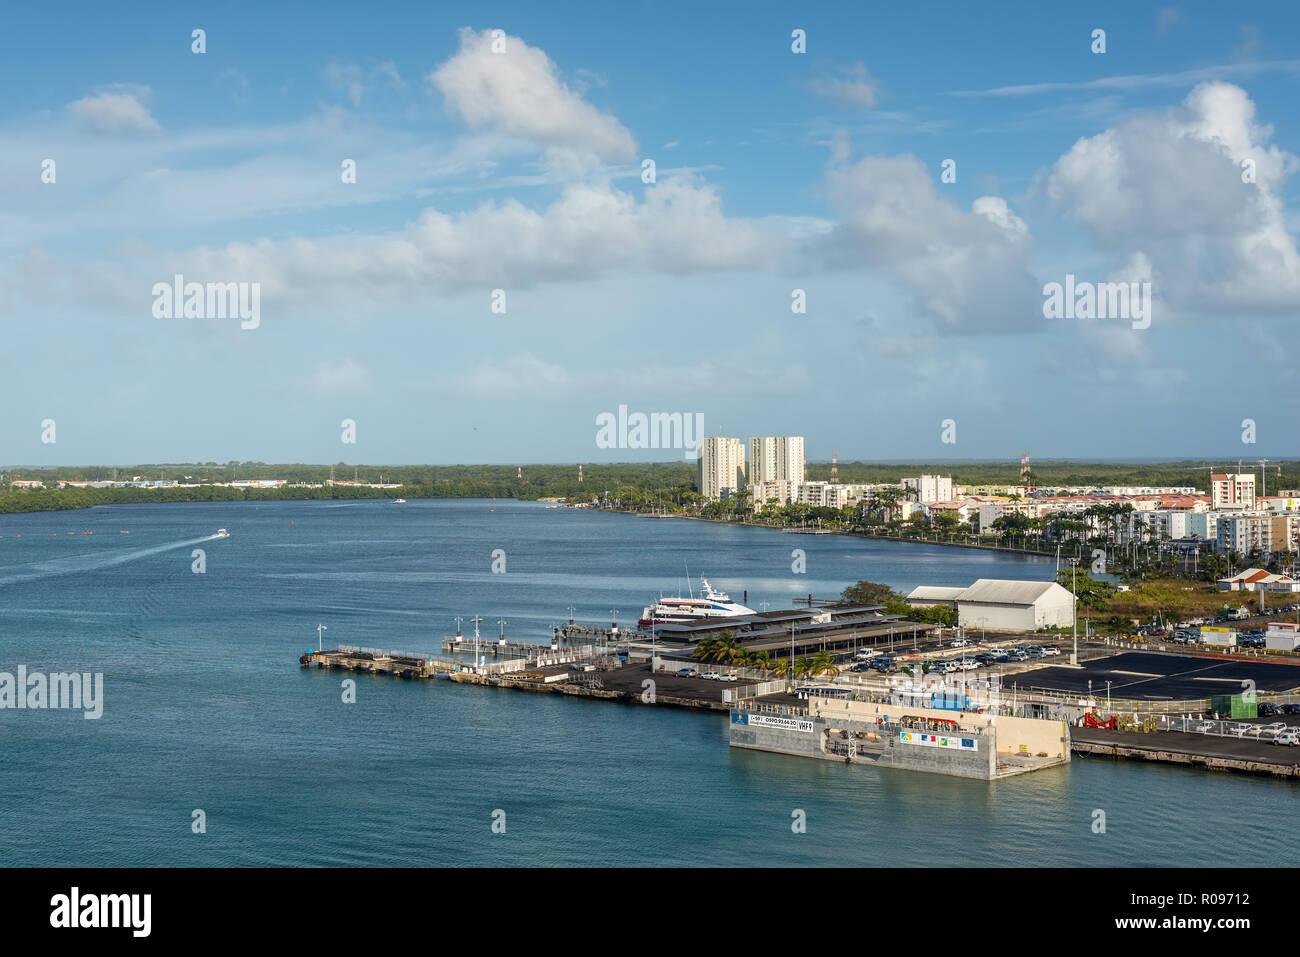 Pointe-à-Pitre, Guadeloupe - Dezember 20, 2016: Waterfront von Pointe-à-Pitre, Guadeloupe, der Region von Frankreich, Kleine Antillen, Caribbea Stockfoto